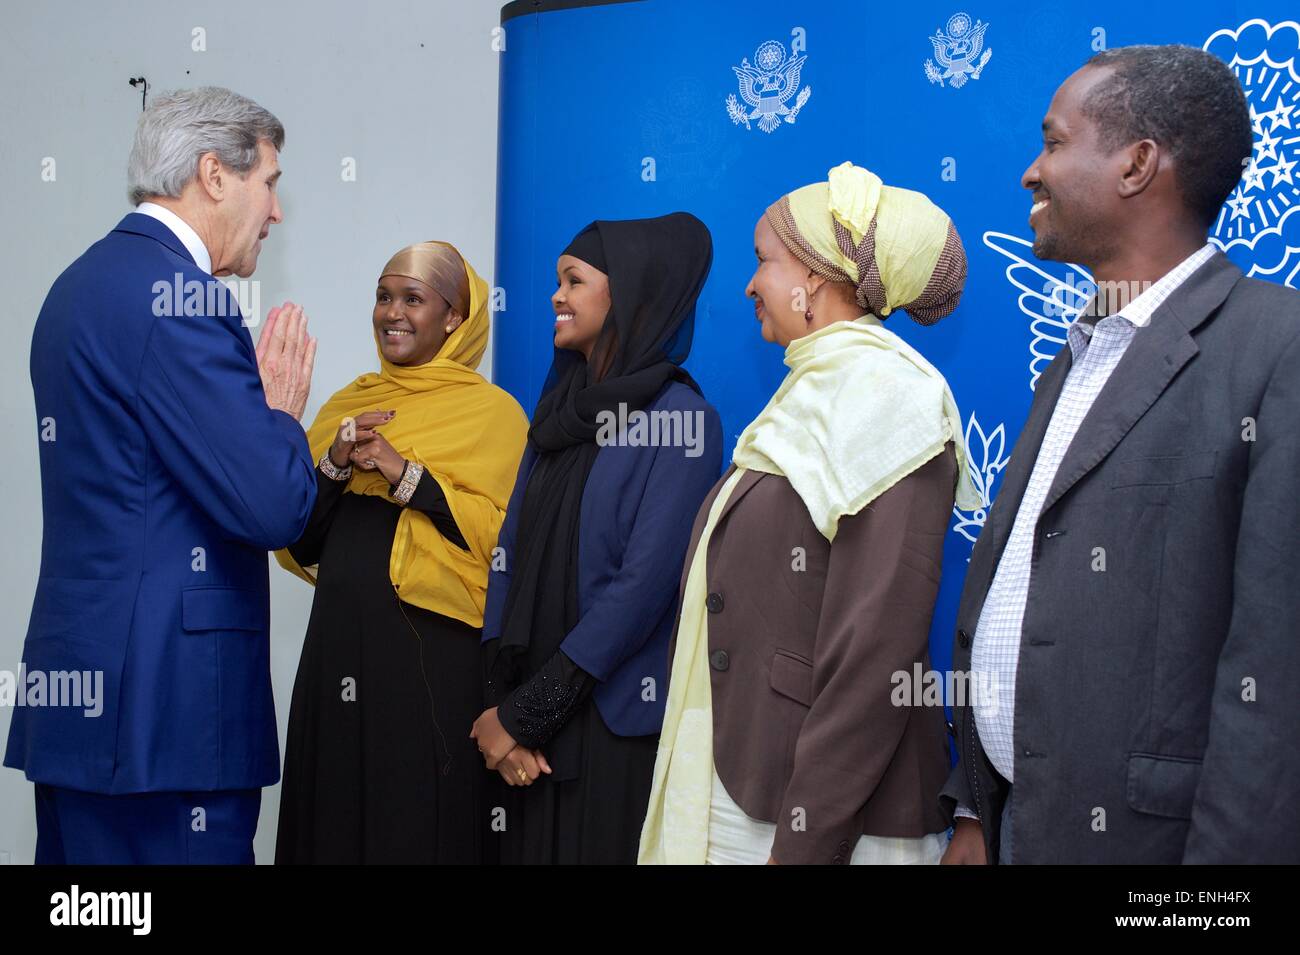 Mogadishu, Somalia. 5th May, 2015. US Secretary of State John Kerry meets four representatives of Somali civil society (L to R) Fartuun Adan, Ilwad Elman, Zainab Hassan, Mohamed Ibrahim - after arriving on an unannounced surprise visit May 5, 2015 in Mogadishu, Somalia. Stock Photo